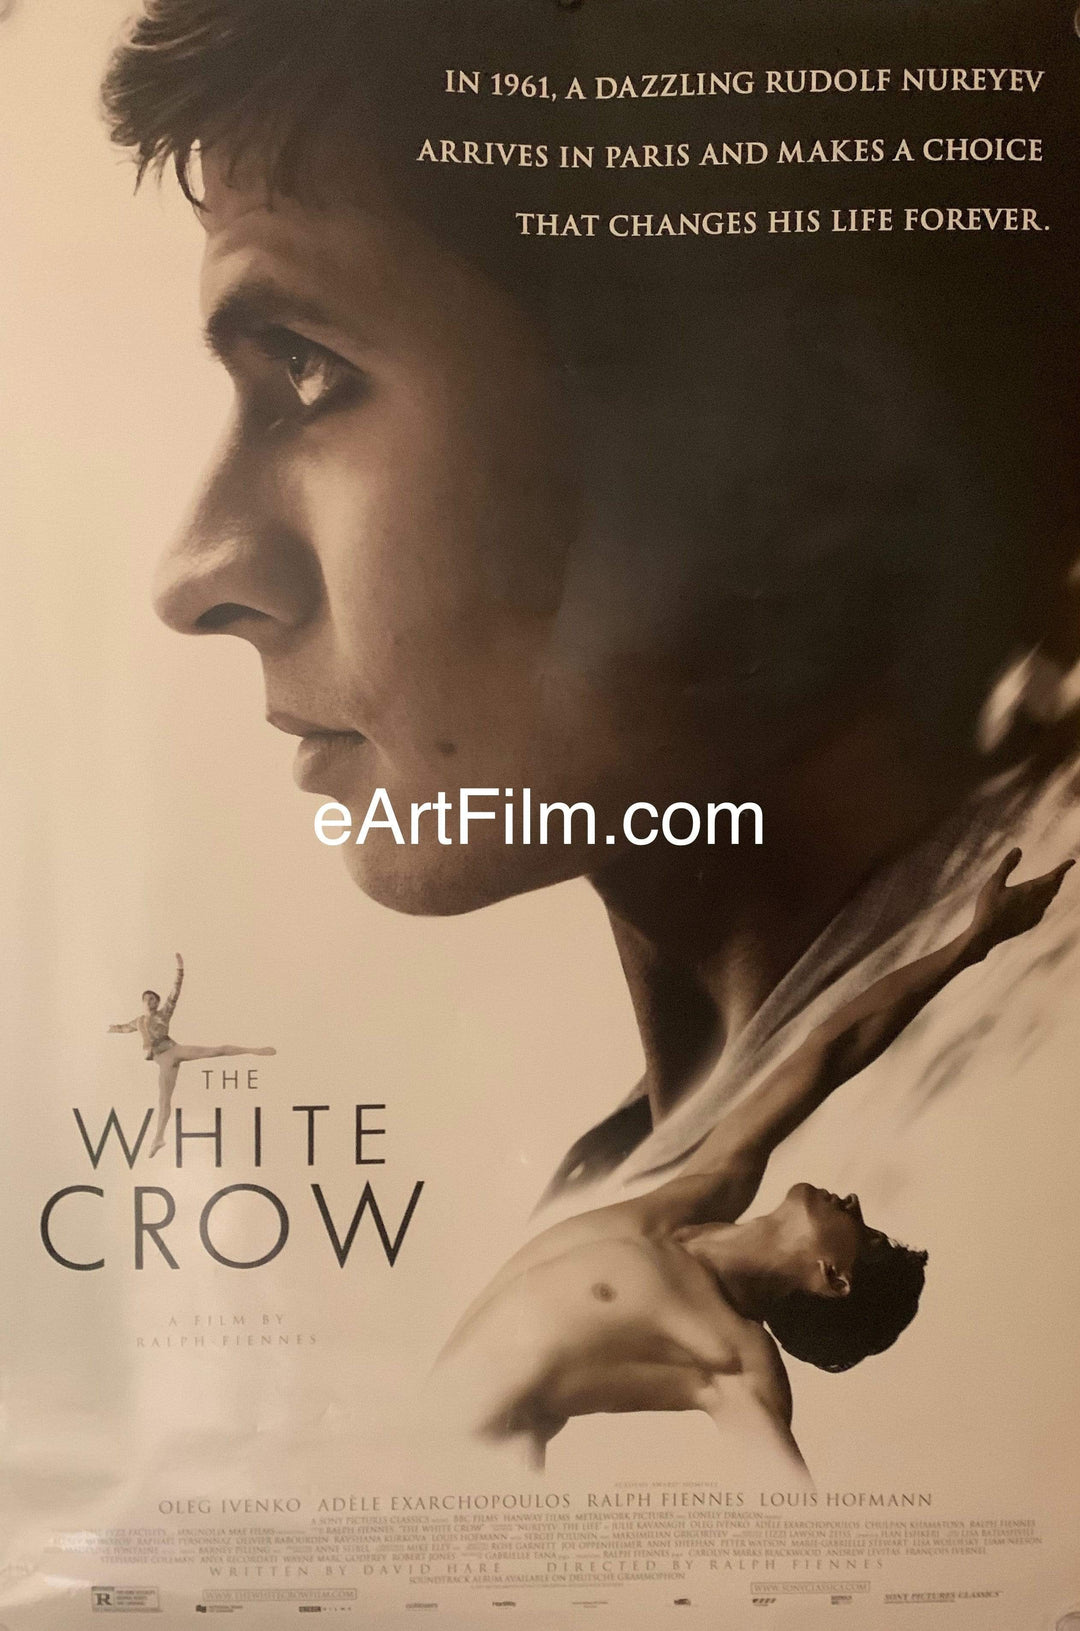 eArtFilm.com U.S Advance One Sheet (27"x40") White Crow 2018 27x40 Ralph Fiennes Rudolf Nureyev biographical drama